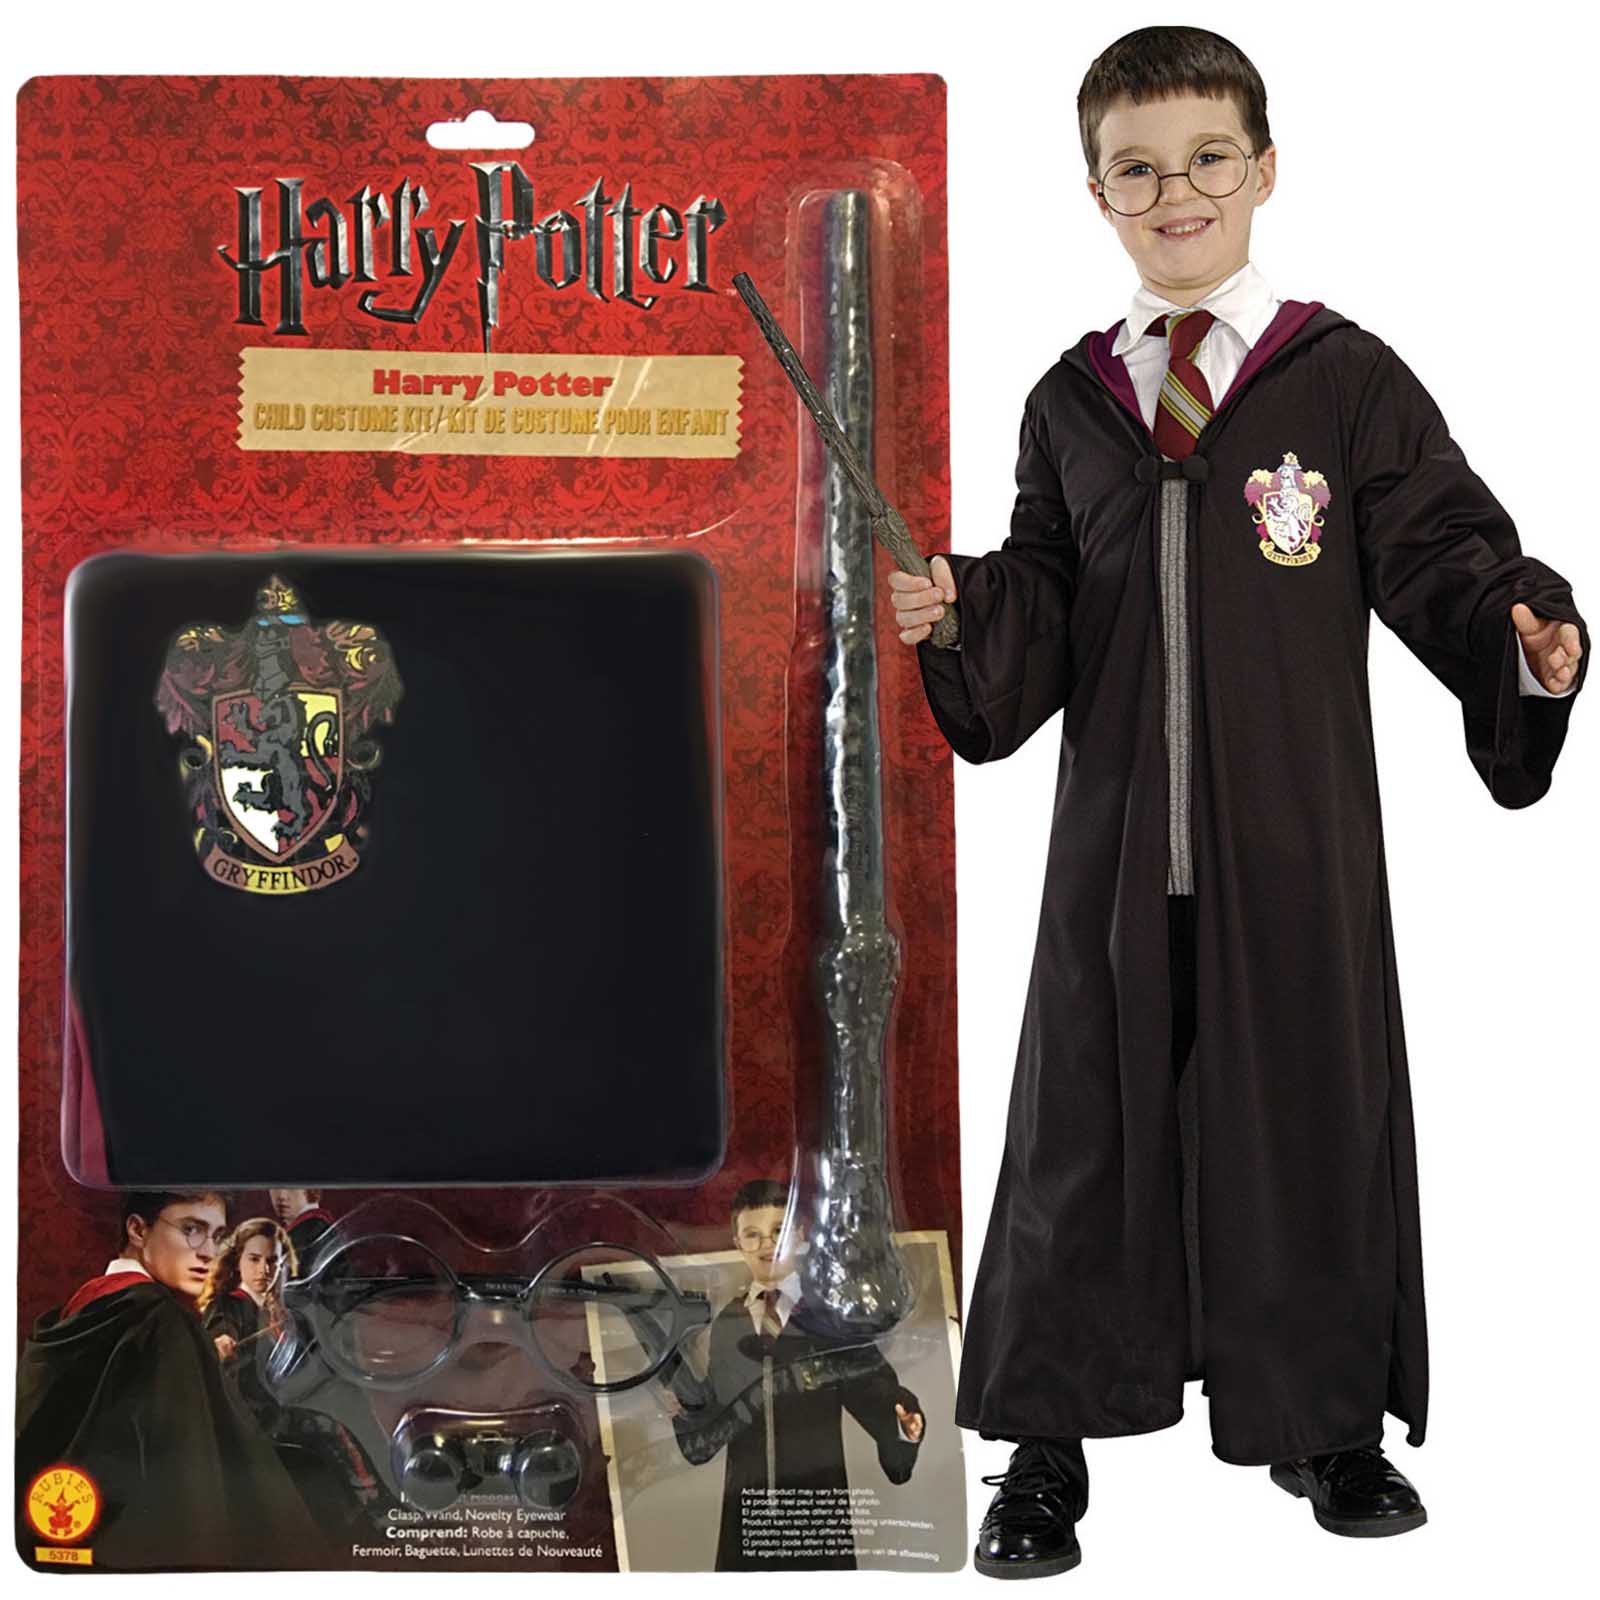 Costume deluxe Hermione Granger enfants, Harry Potter